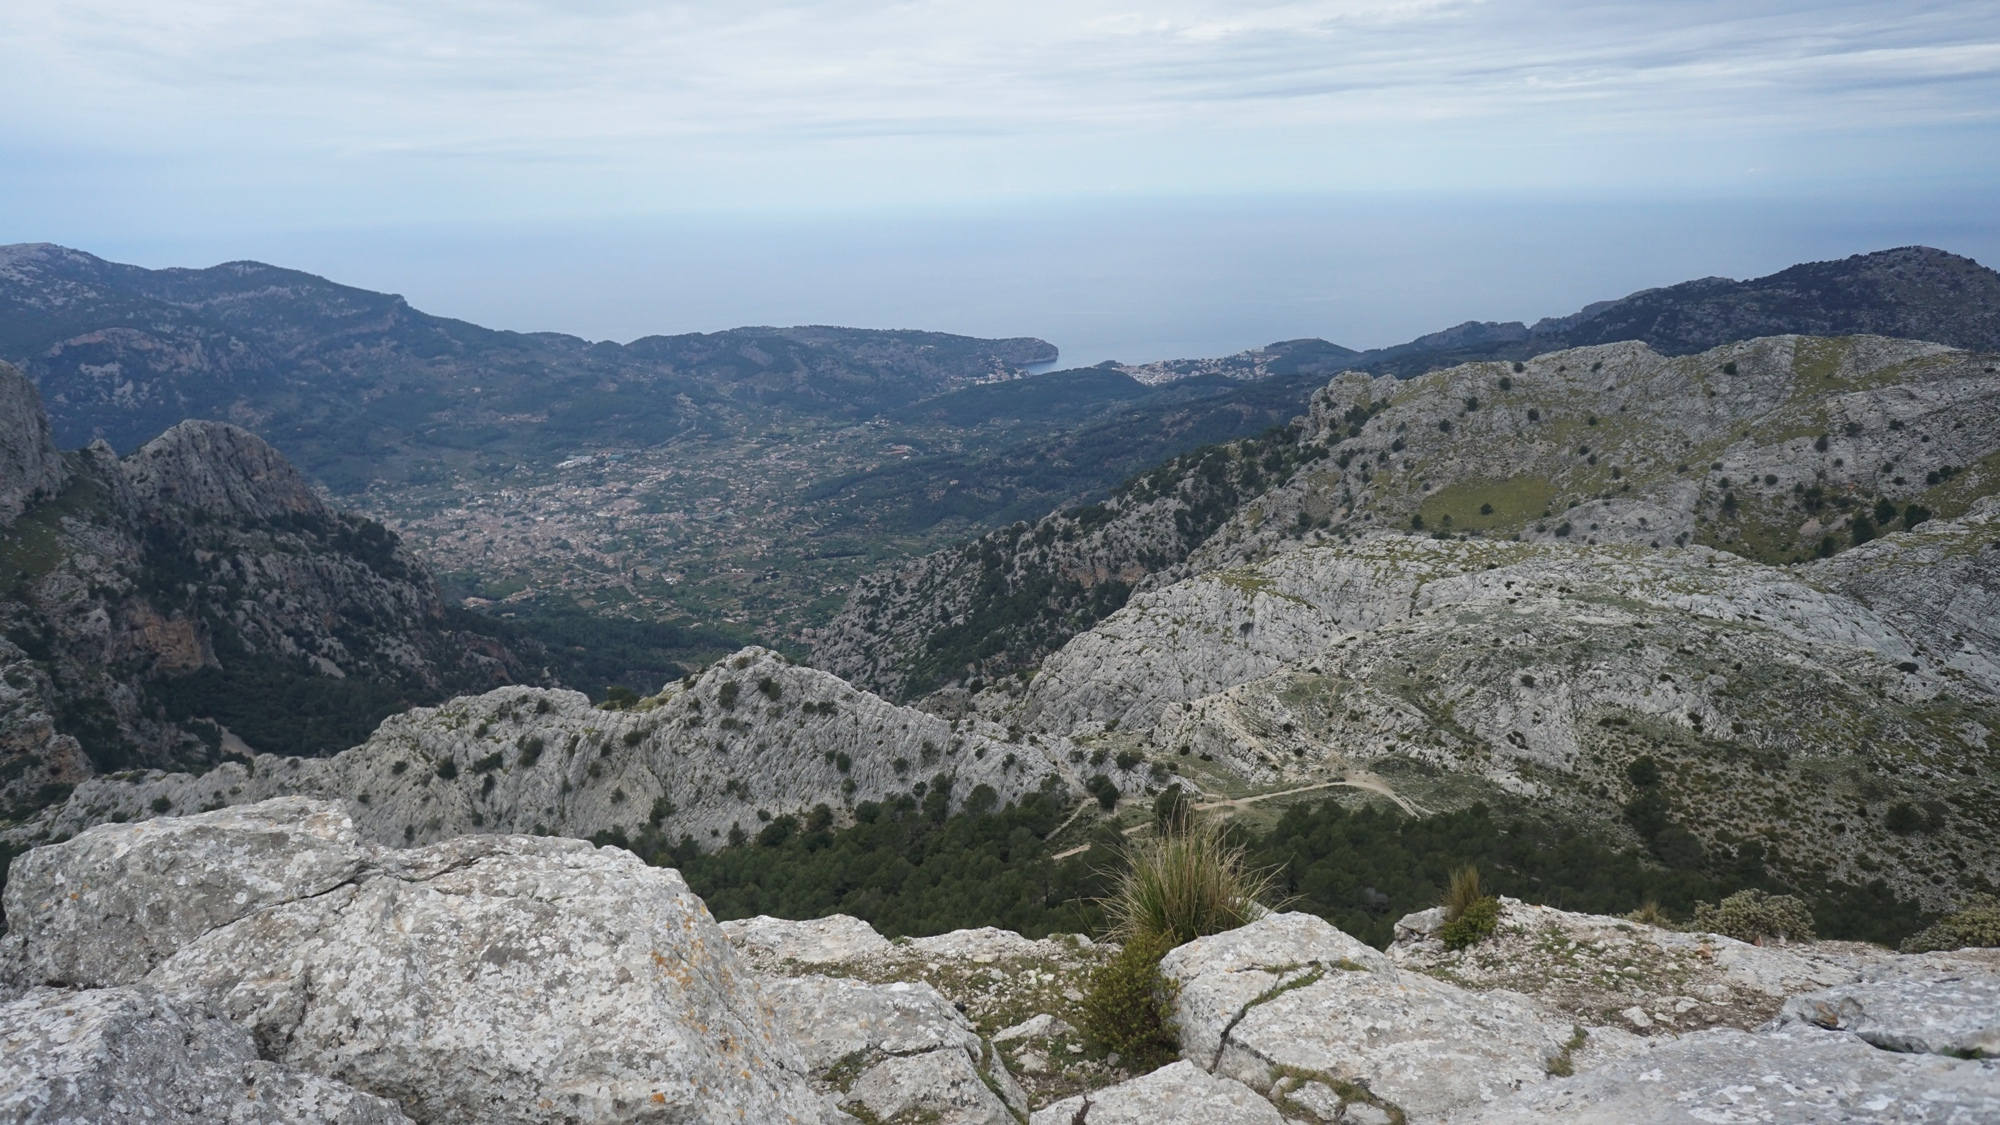 Der Blick vom Gipfel des Puig de l’Ofre auf Sóller im Westen.